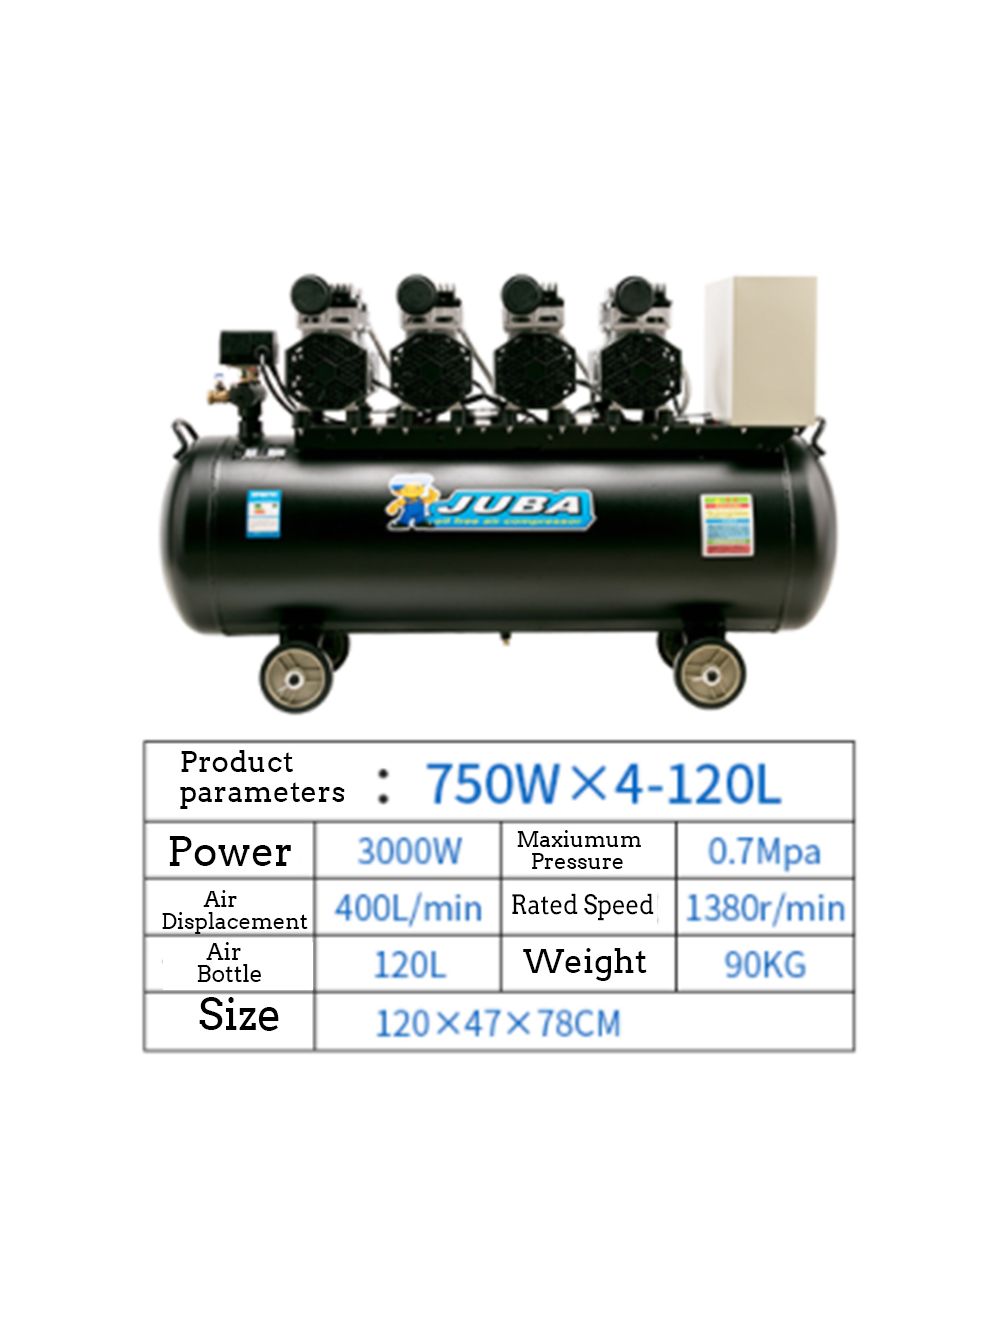 New In stock for sale, ANDELI Air Compressor 750W×4-120L